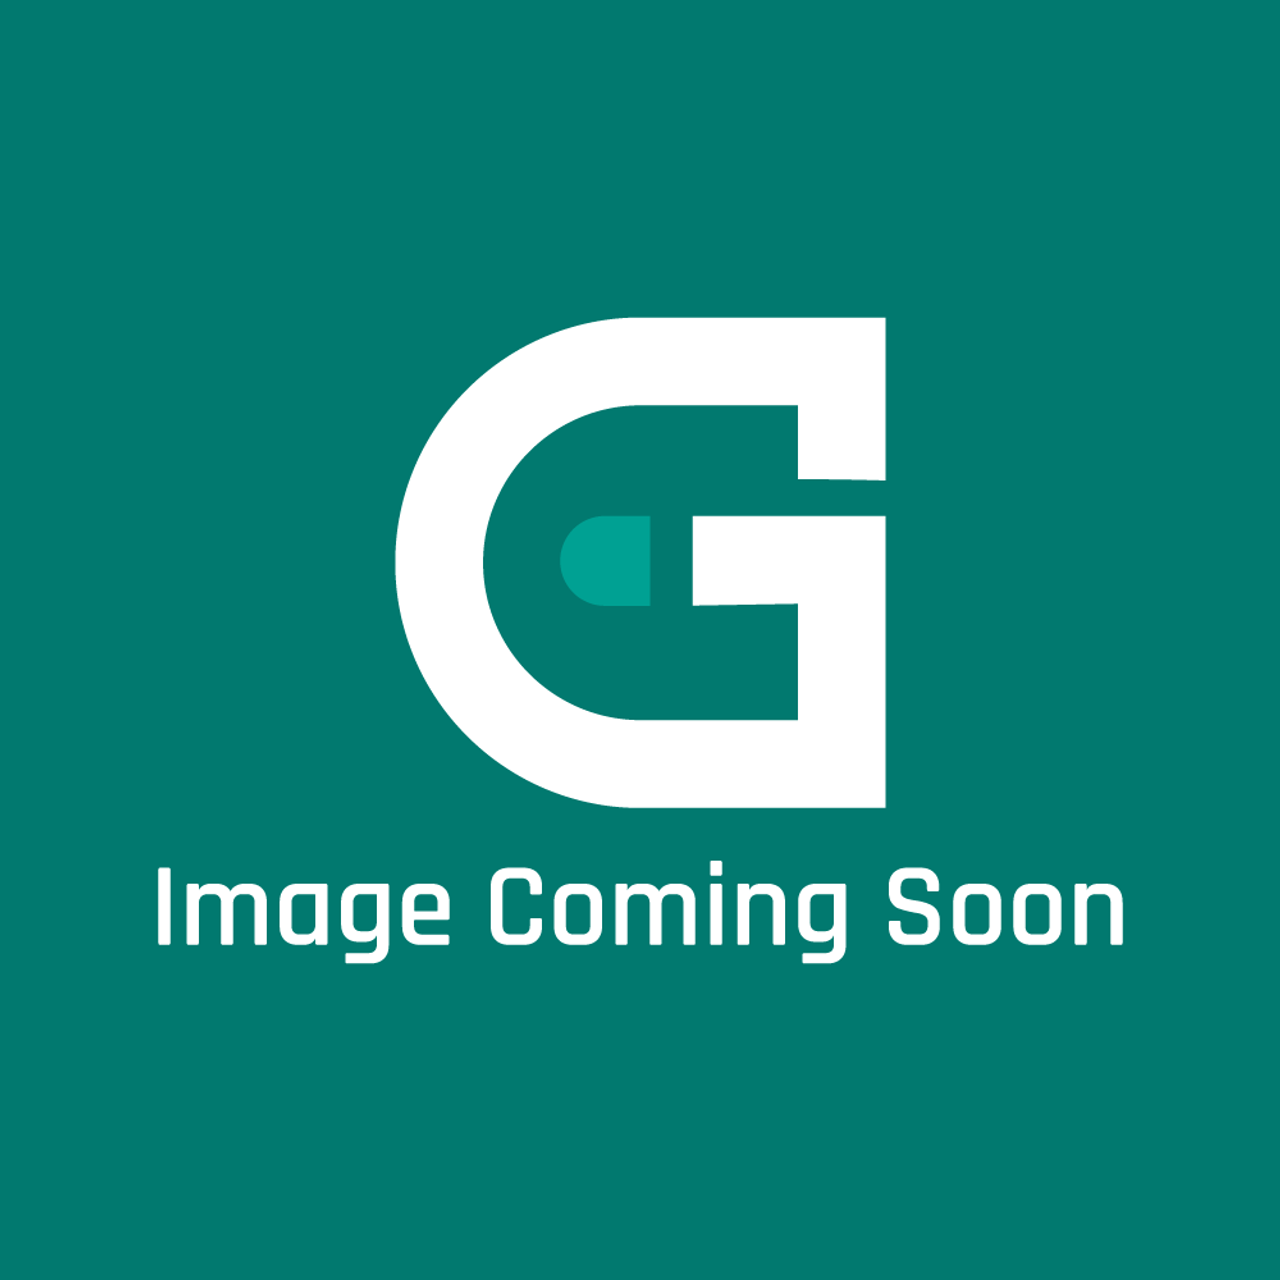 GE Appliances WB1K7 - Pin Broiler - Image Coming Soon!